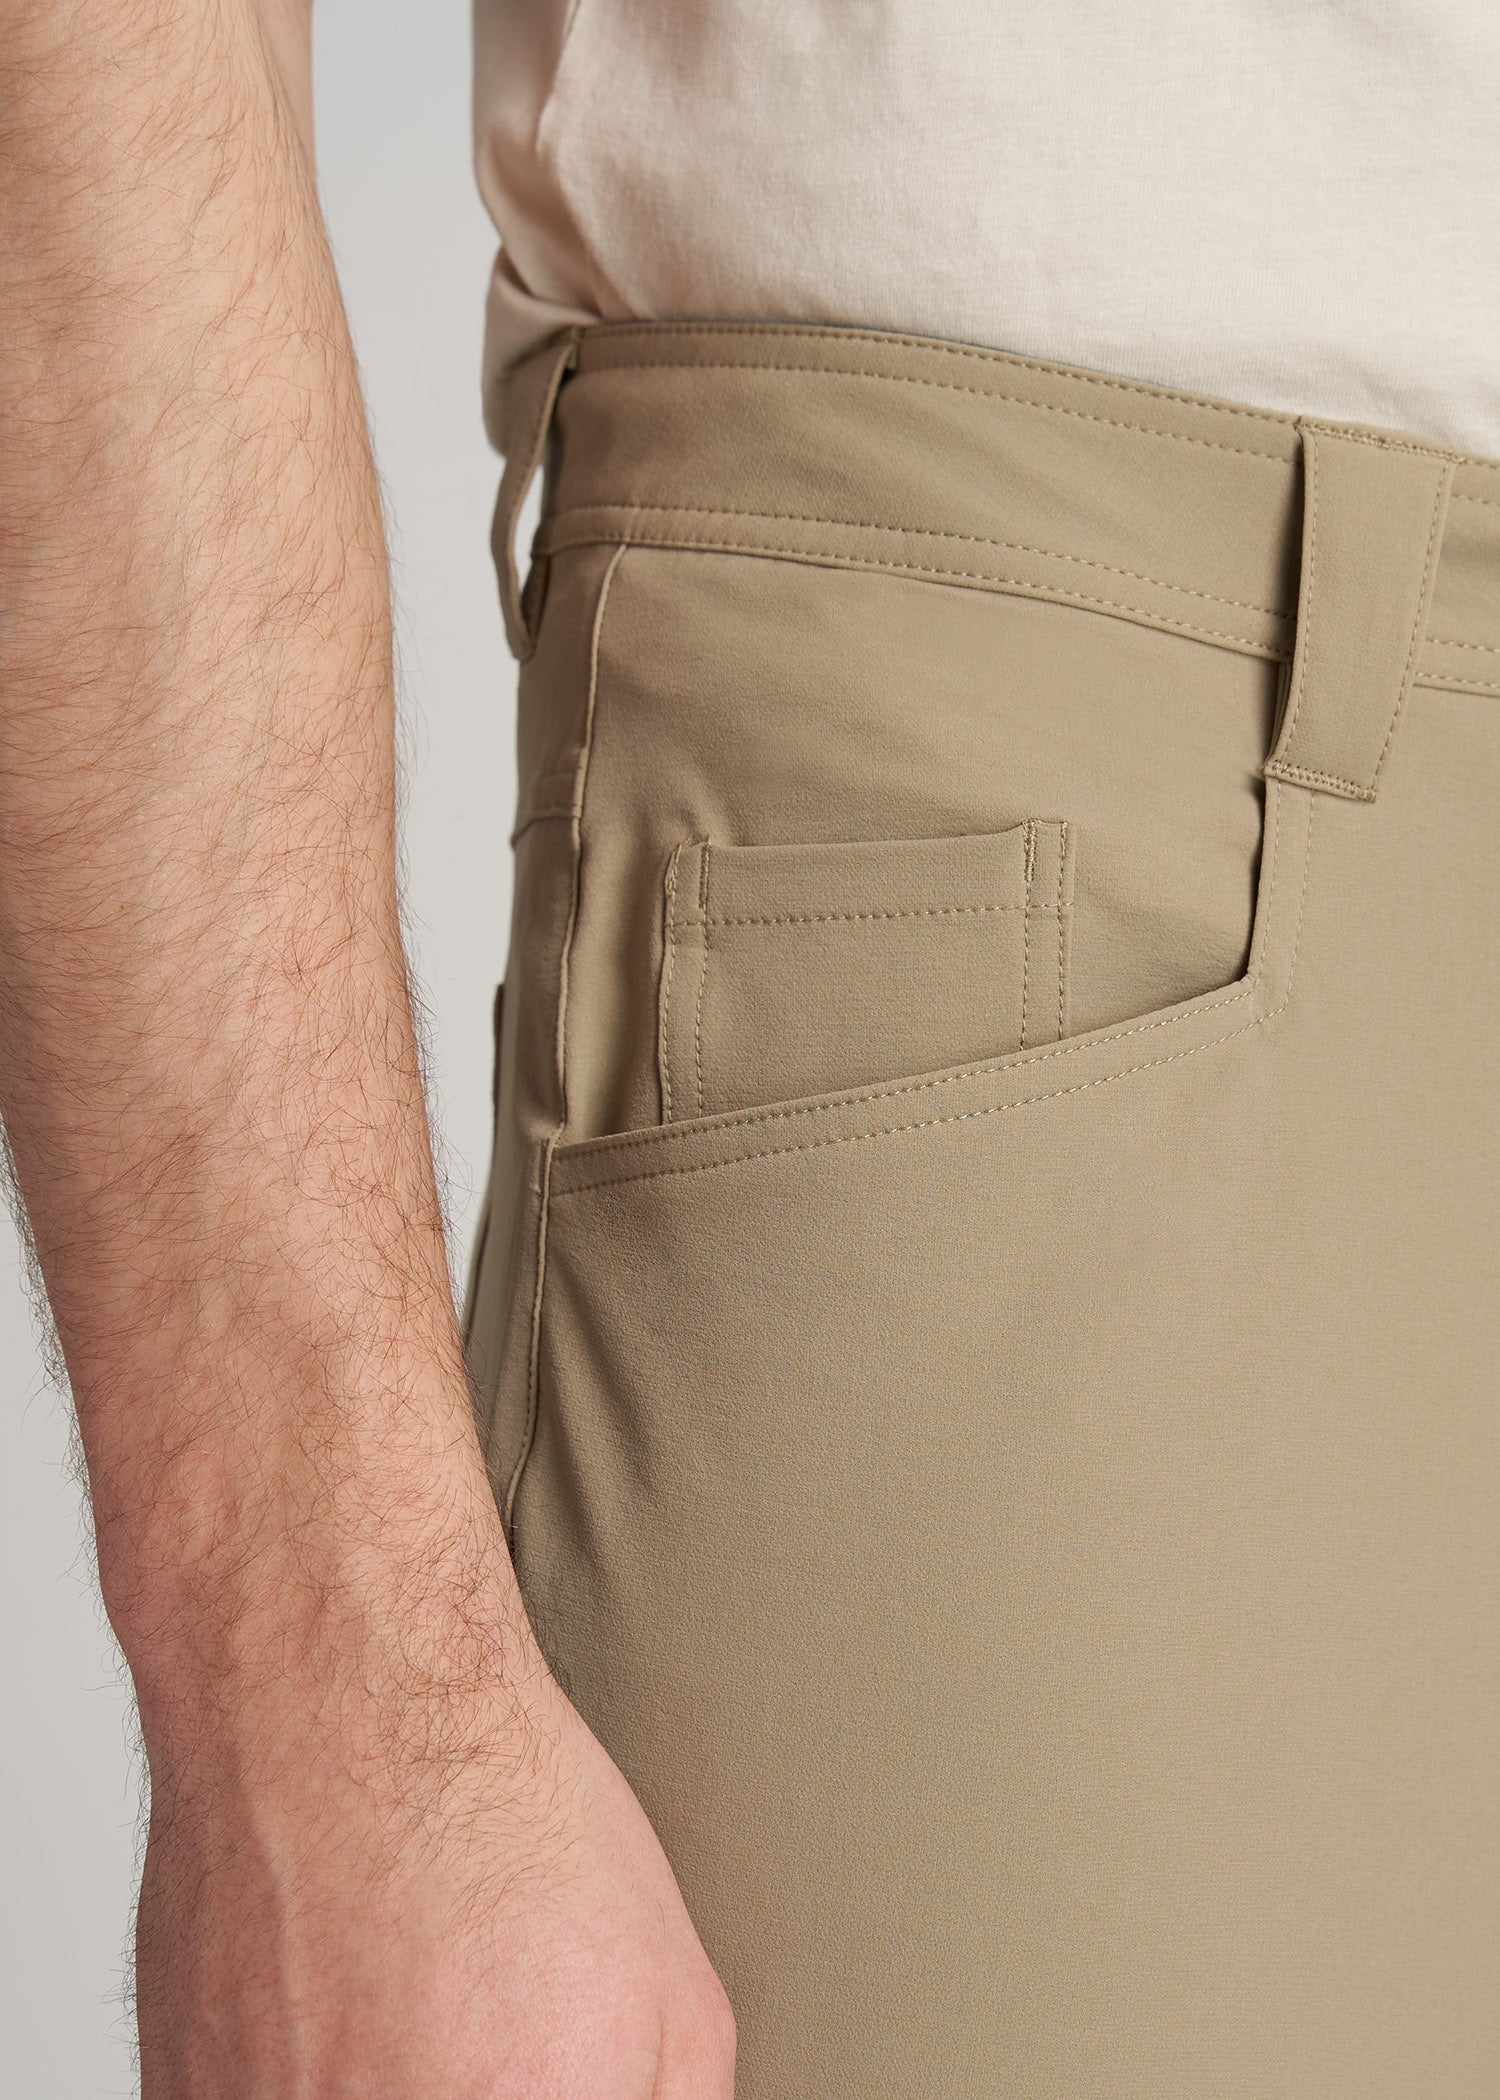    American-Tall-Men-Hiking-Shorts-Tan-detail